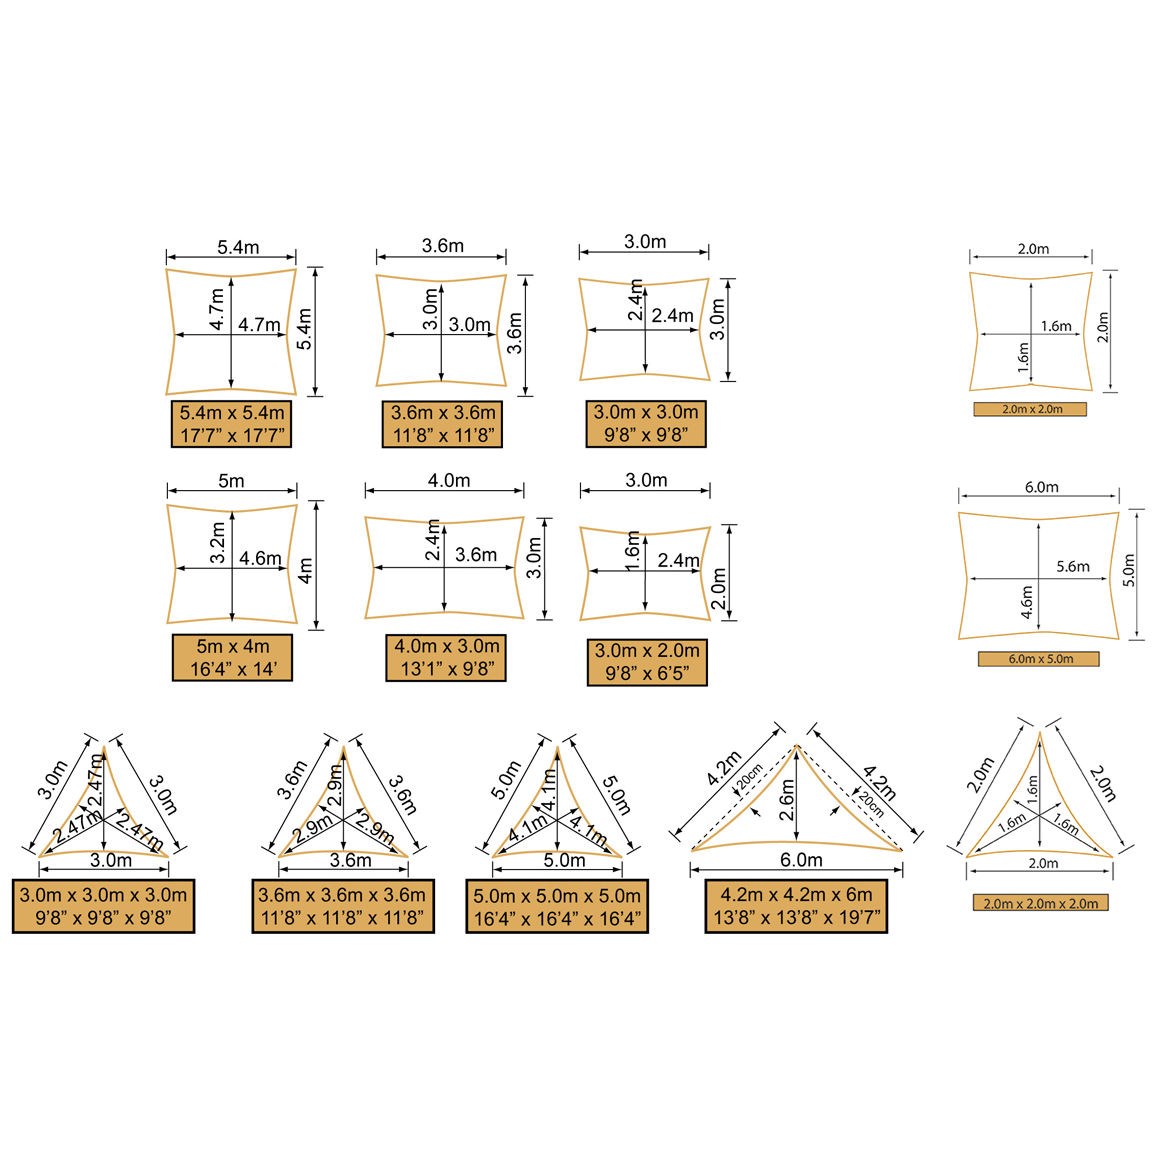 Portable Pyramid Ivory Shade Sail Kit w/ Pole, Ropes and Pegs - Easy Set Up